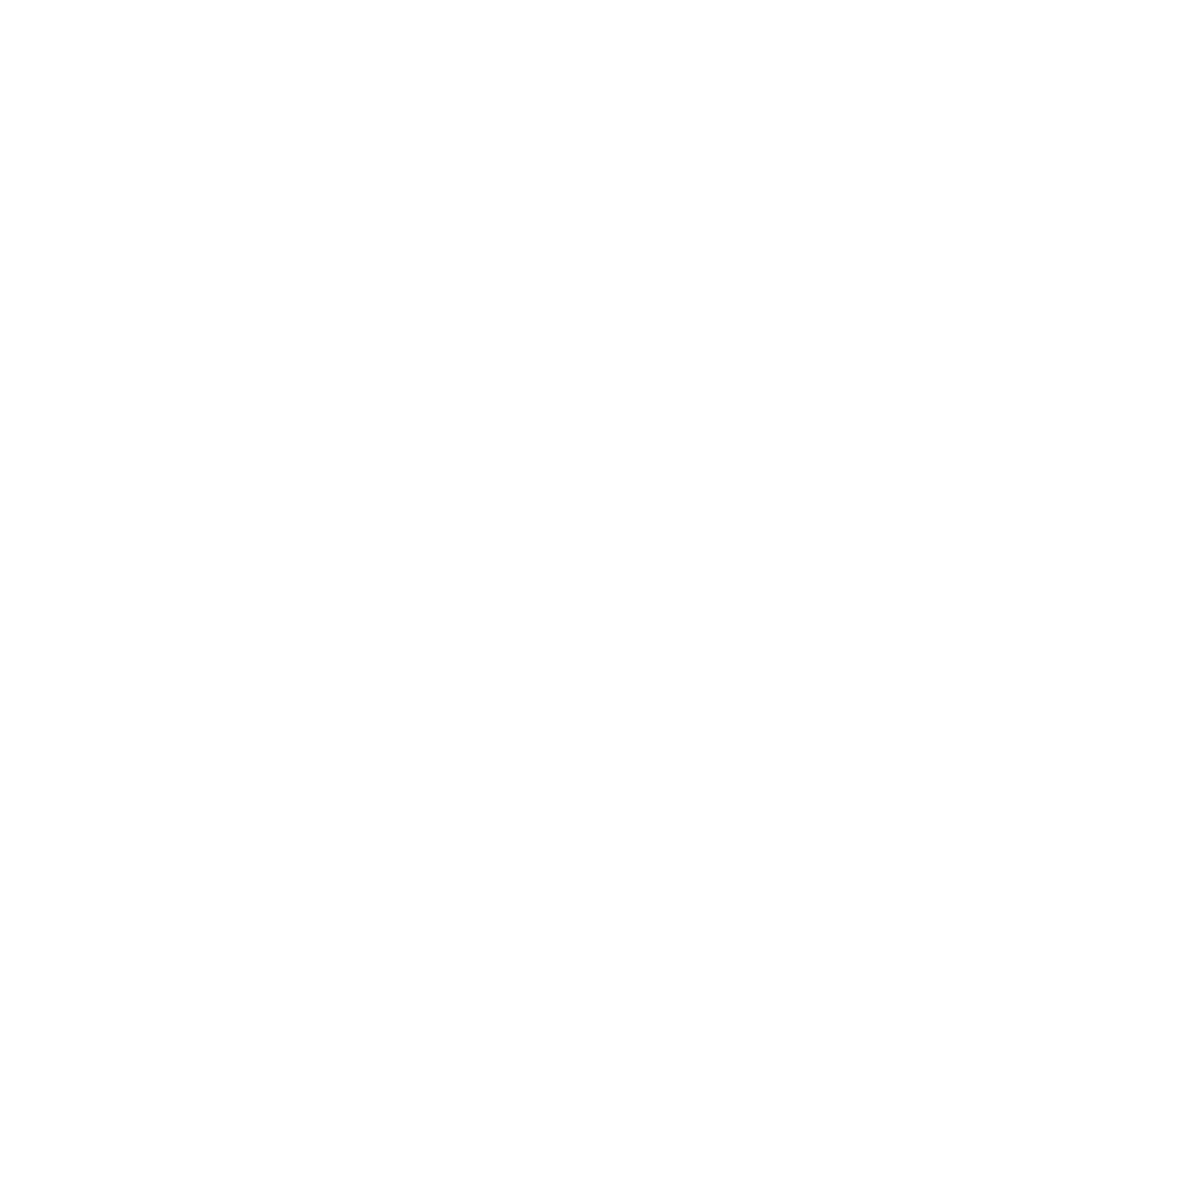 Logo Villa Picenum